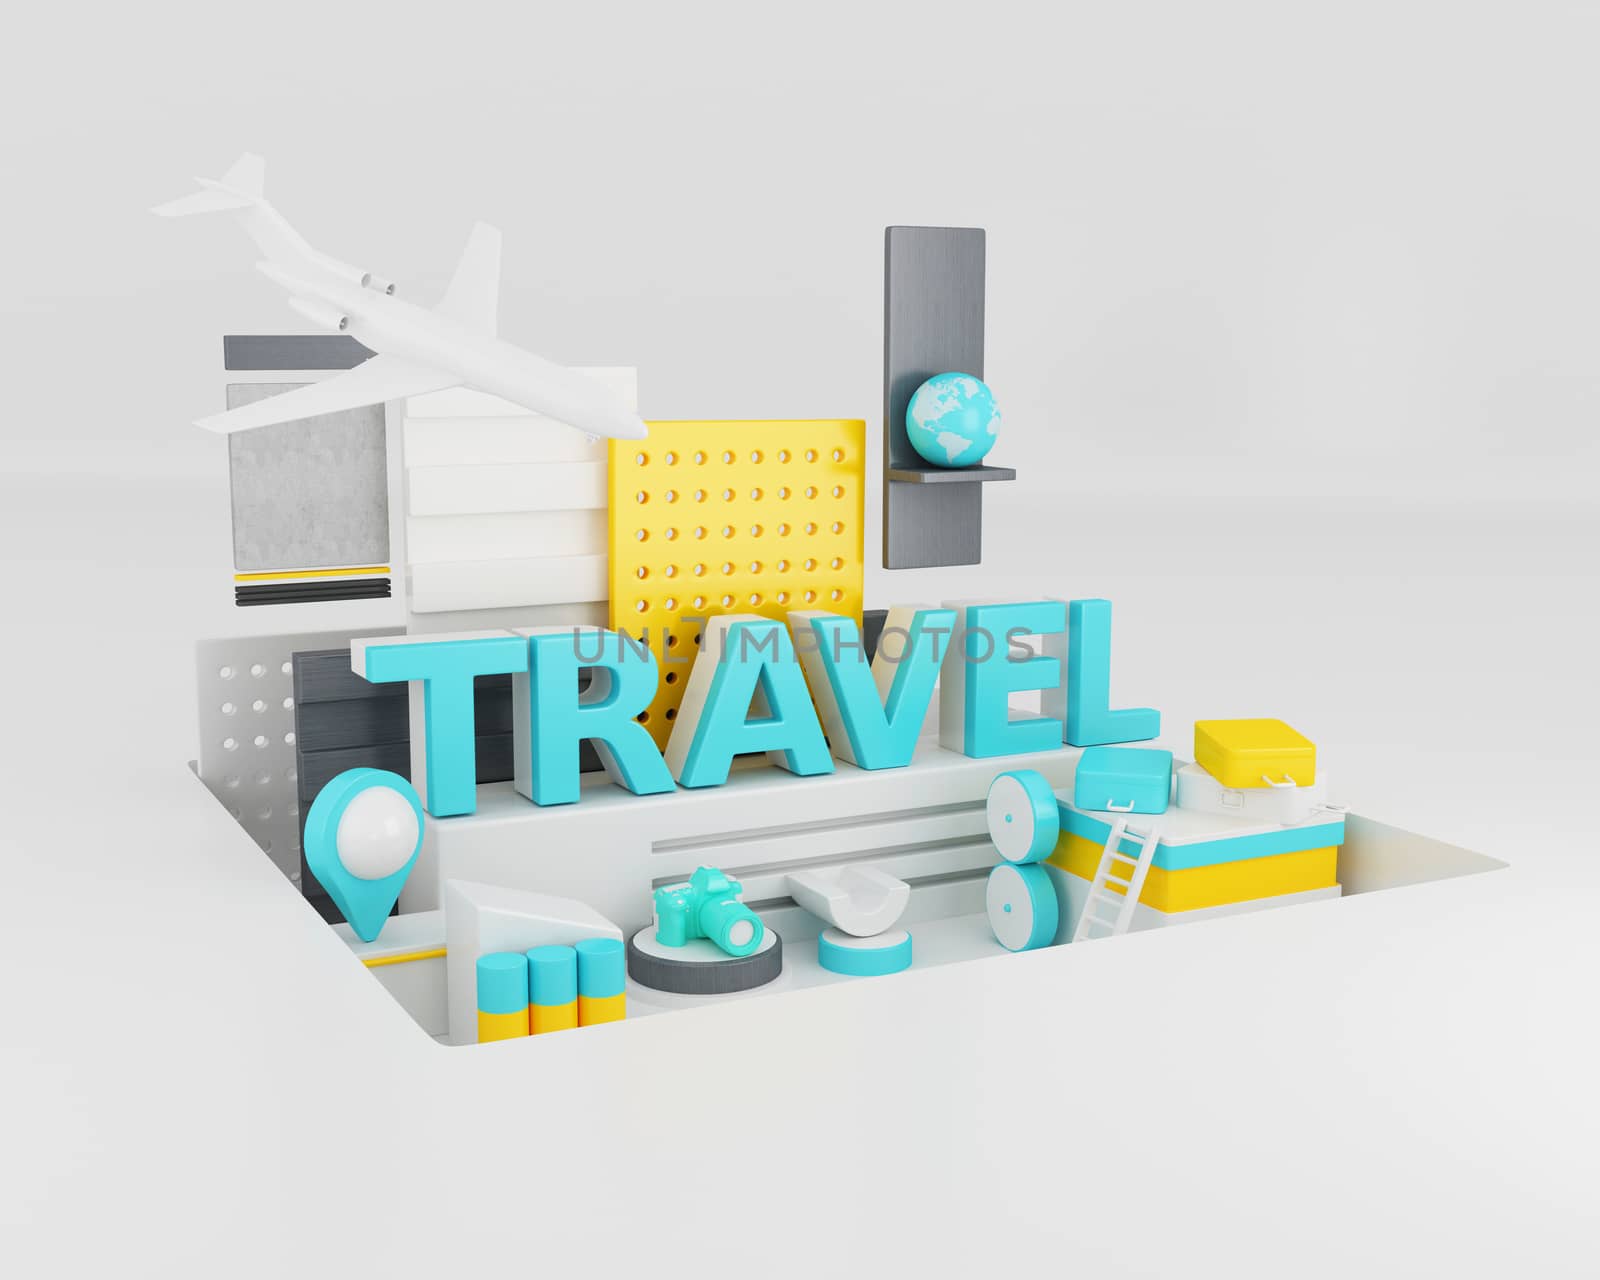 3d illustration. Word travel, design concept. Creative travel idea.